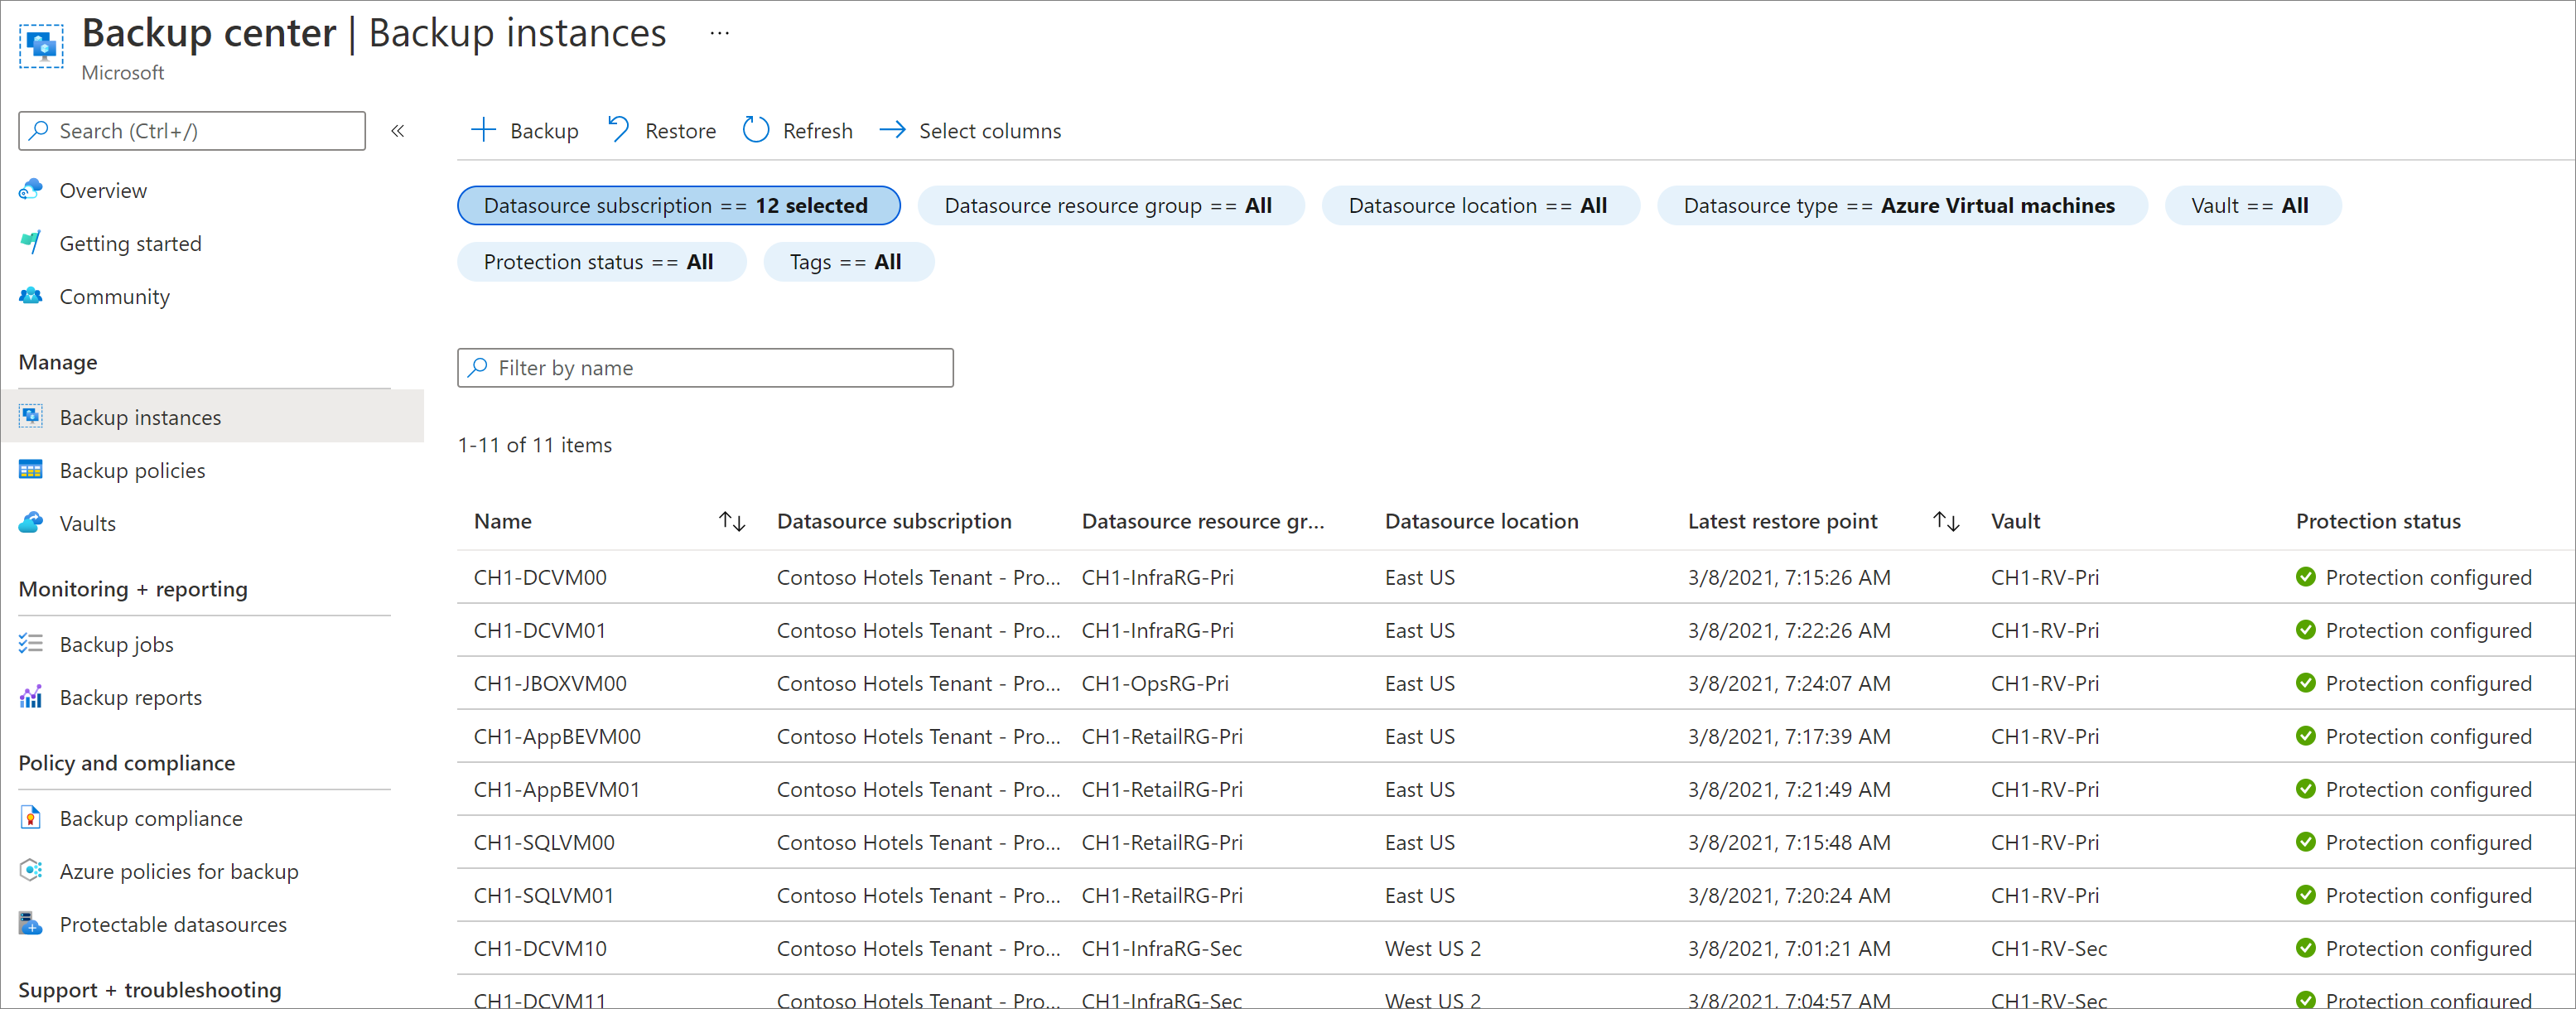 Screenshot shows the Backup center instances.